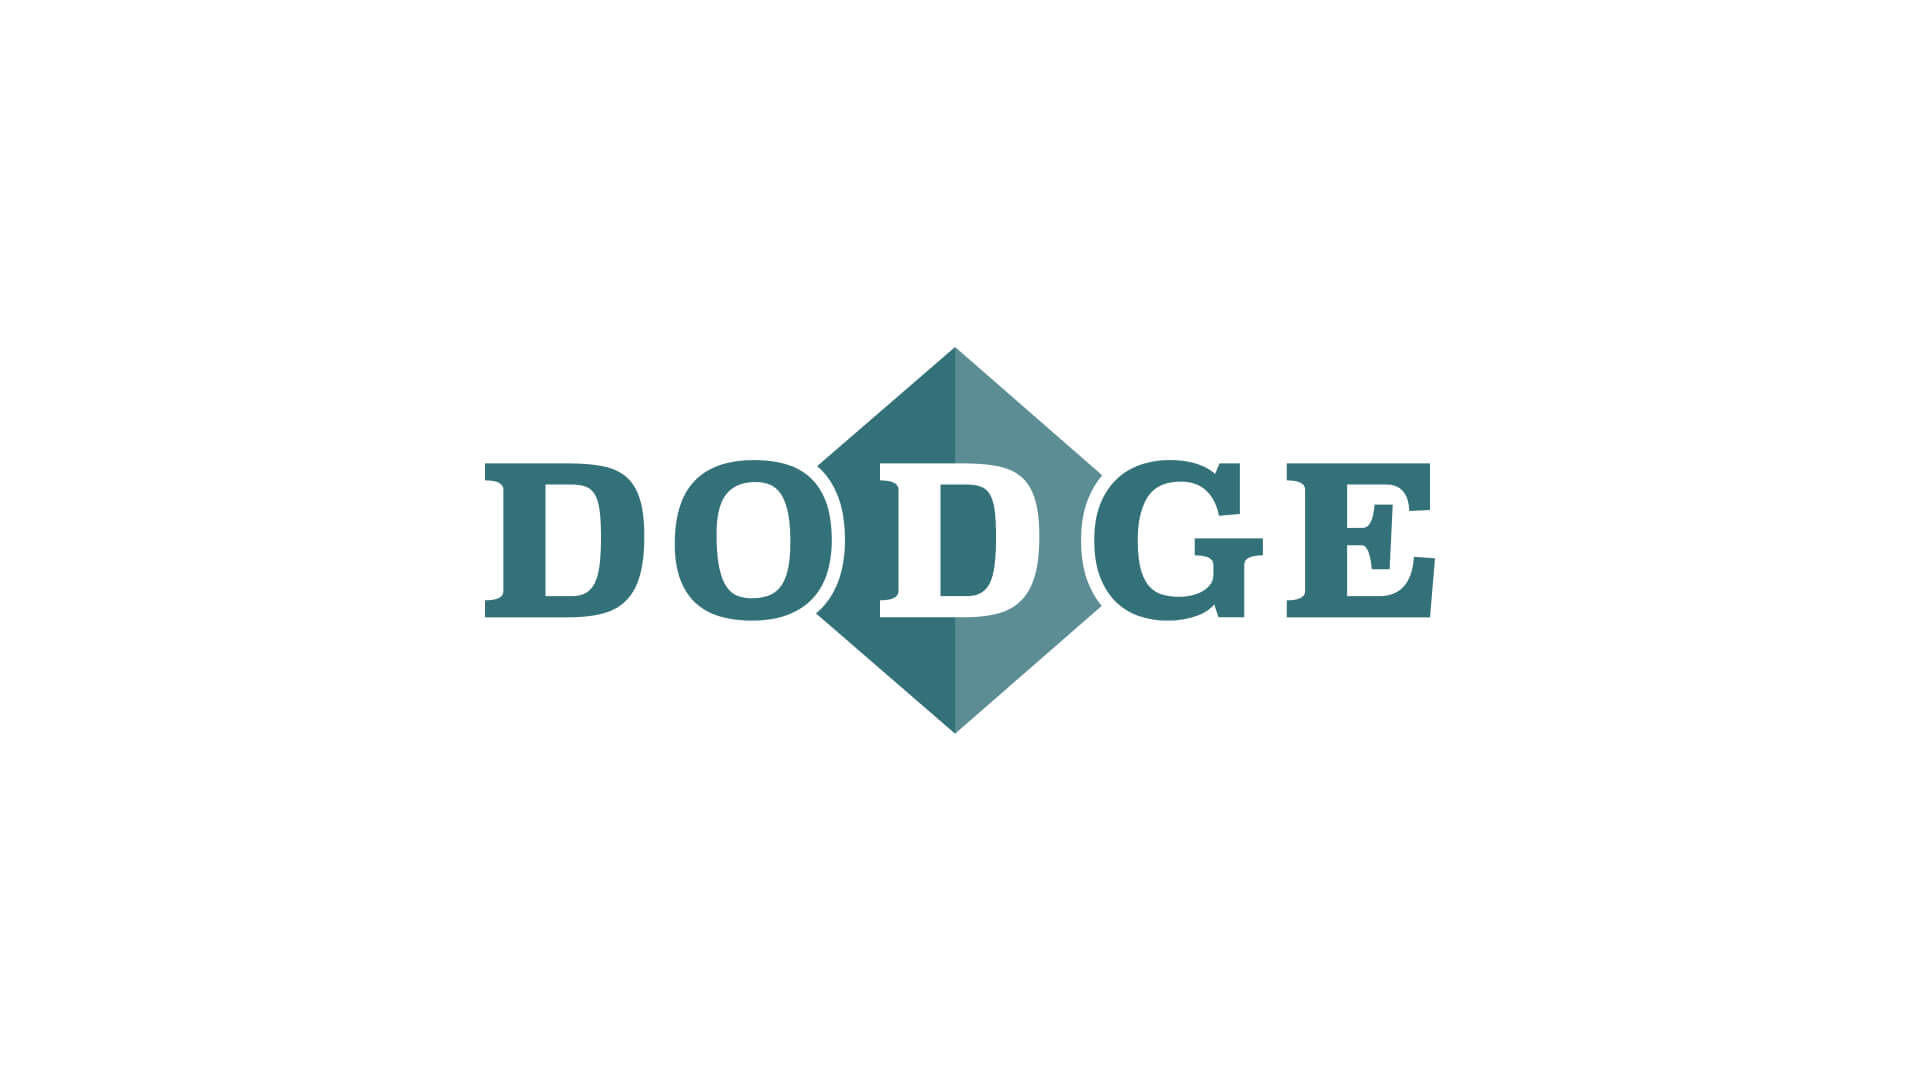 Dodge Industrial logo in color